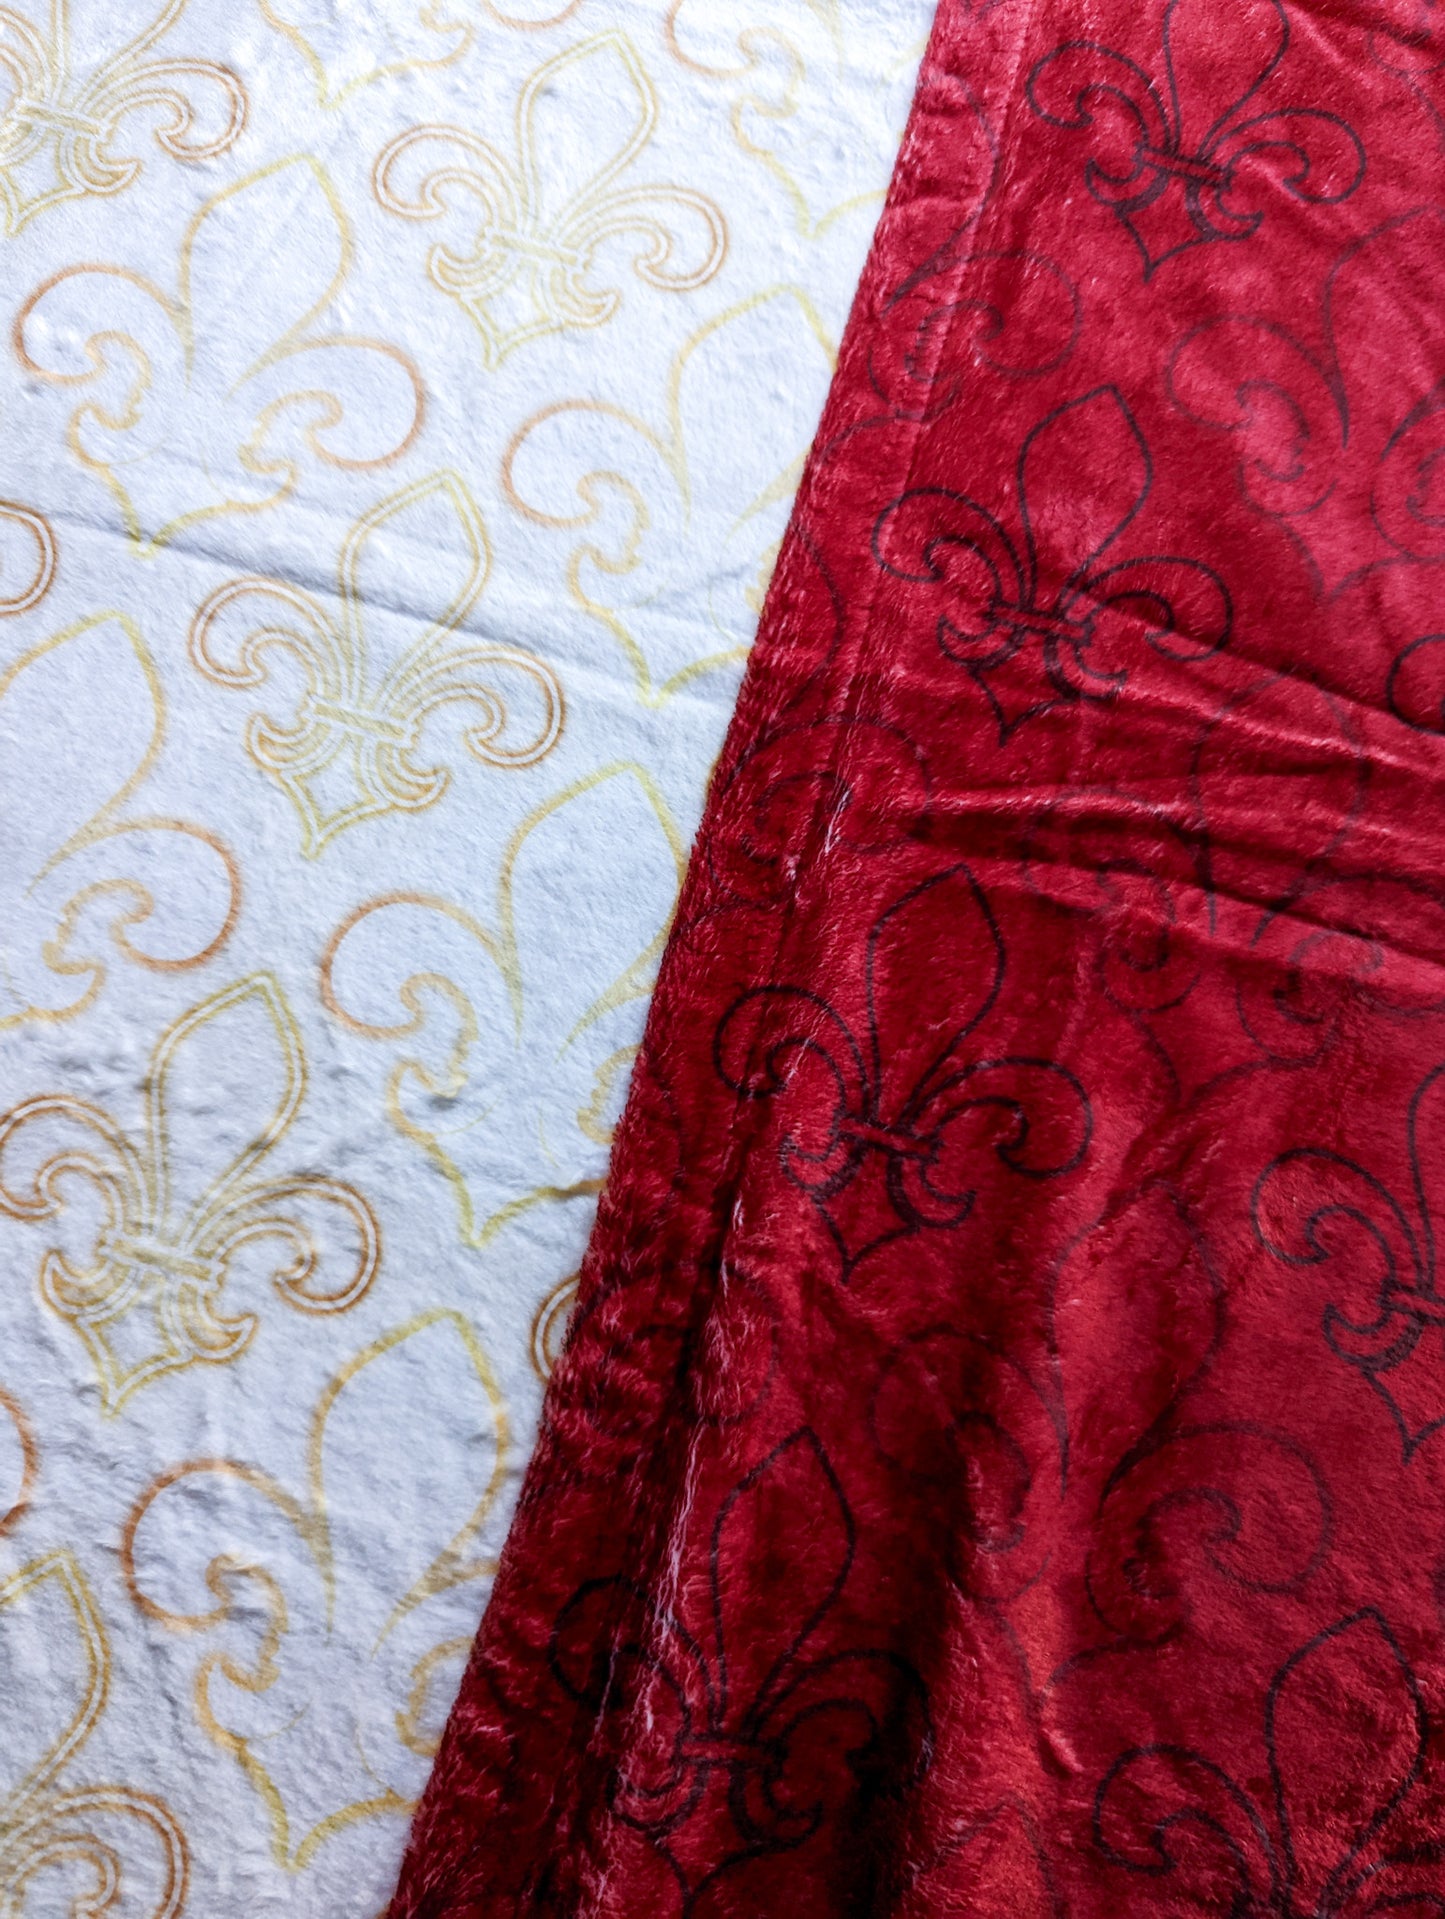 Red and White Fleur De Lis Altar Cloth + Vestment Blanket